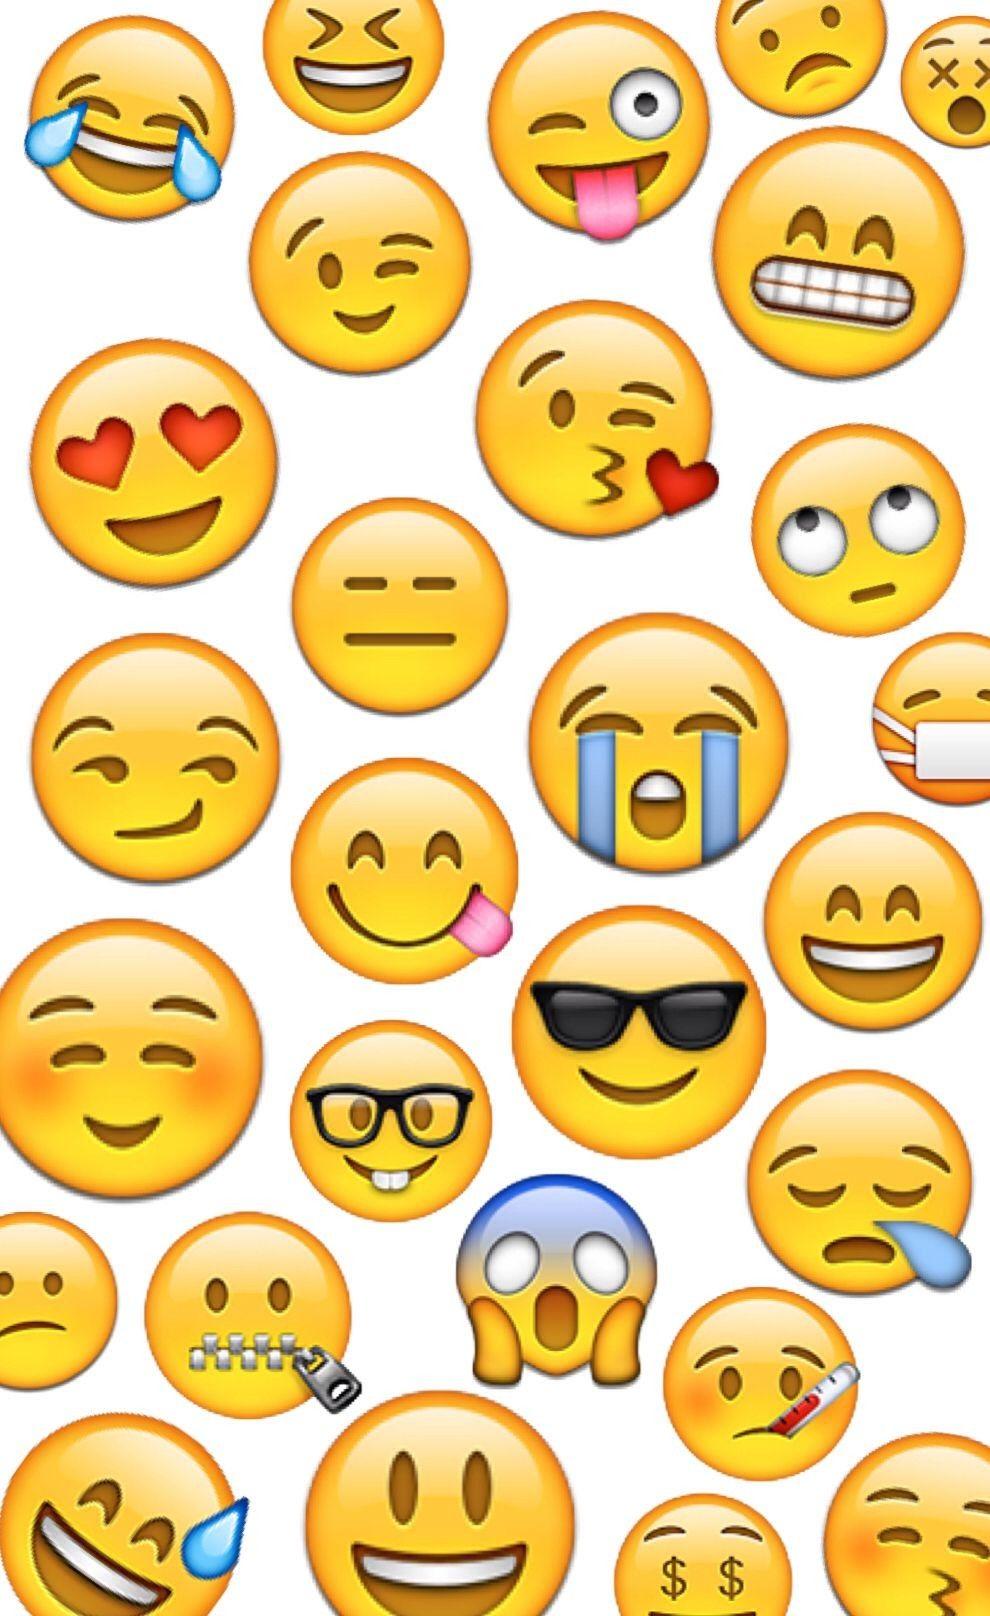 Ok Emoji Wallpaper Fresh Cute Emojis Wallpaper Google Search